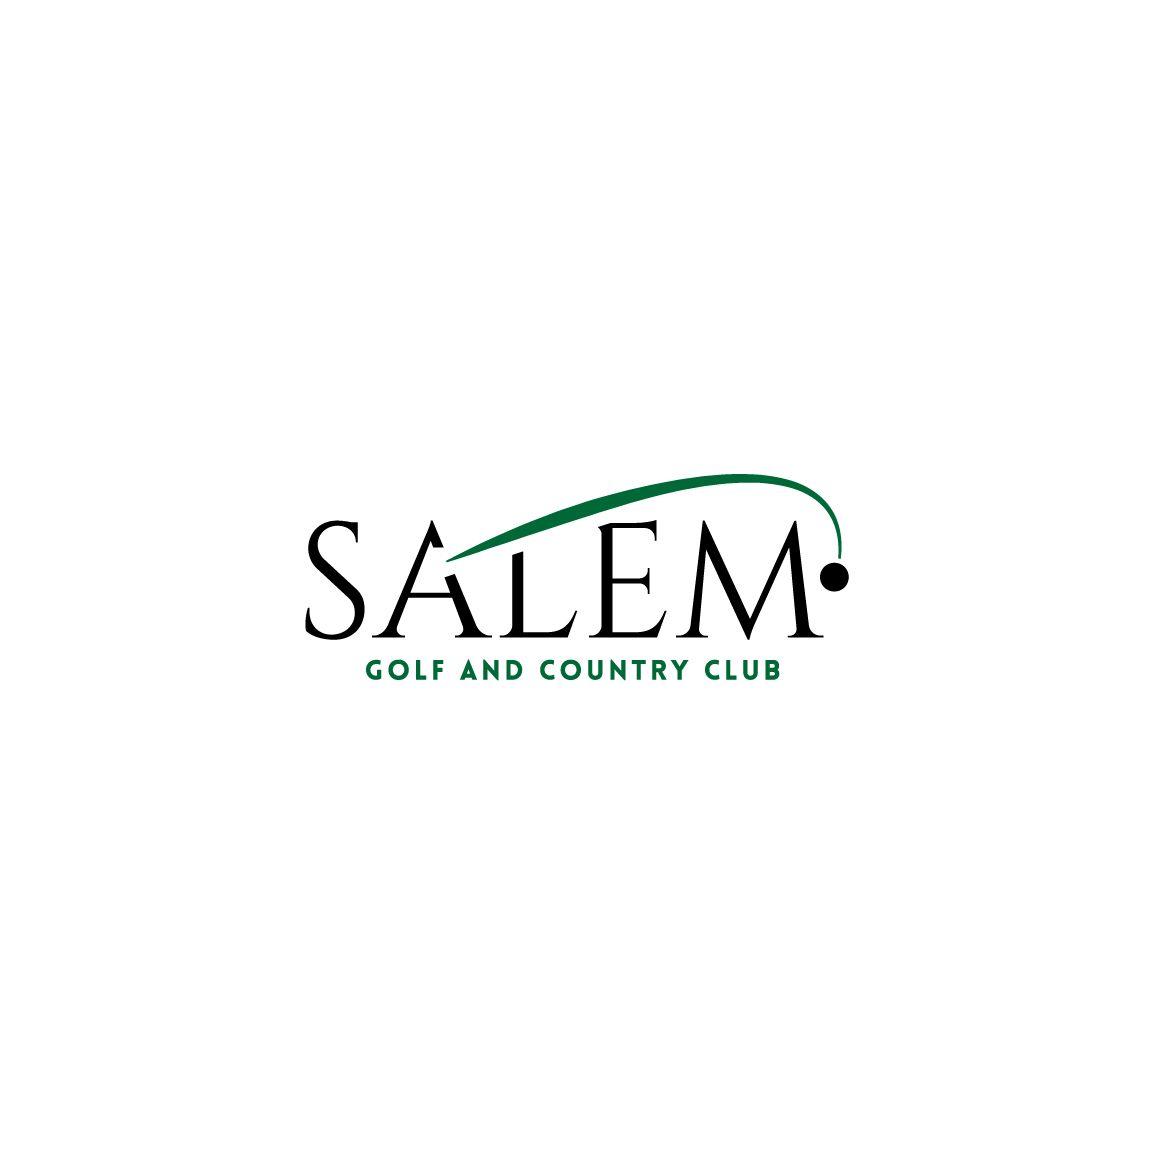 Salem Logo - Upmarket, Bold, Club Logo Design for Salem golf and country club or ...